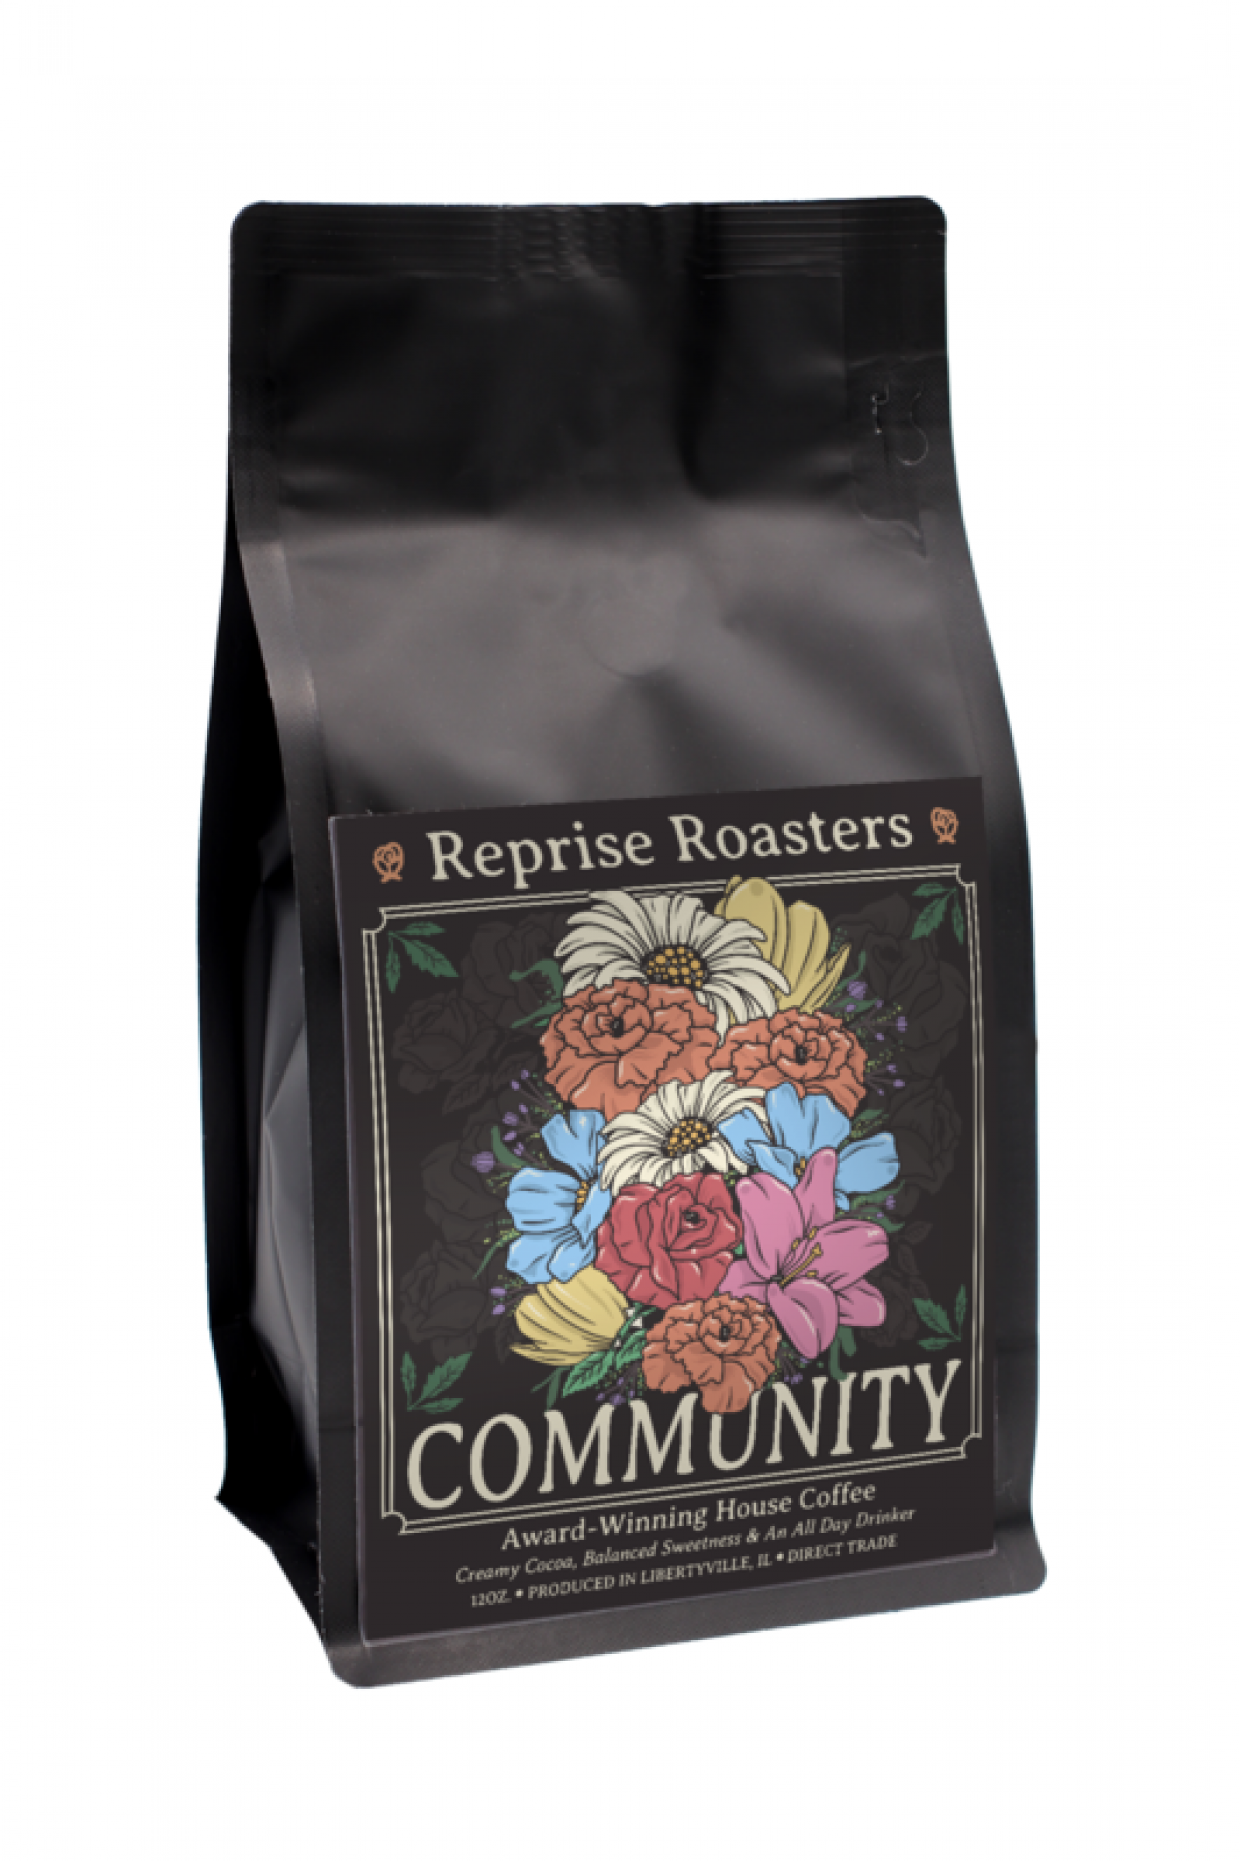 Community - Award-winning House Coffee